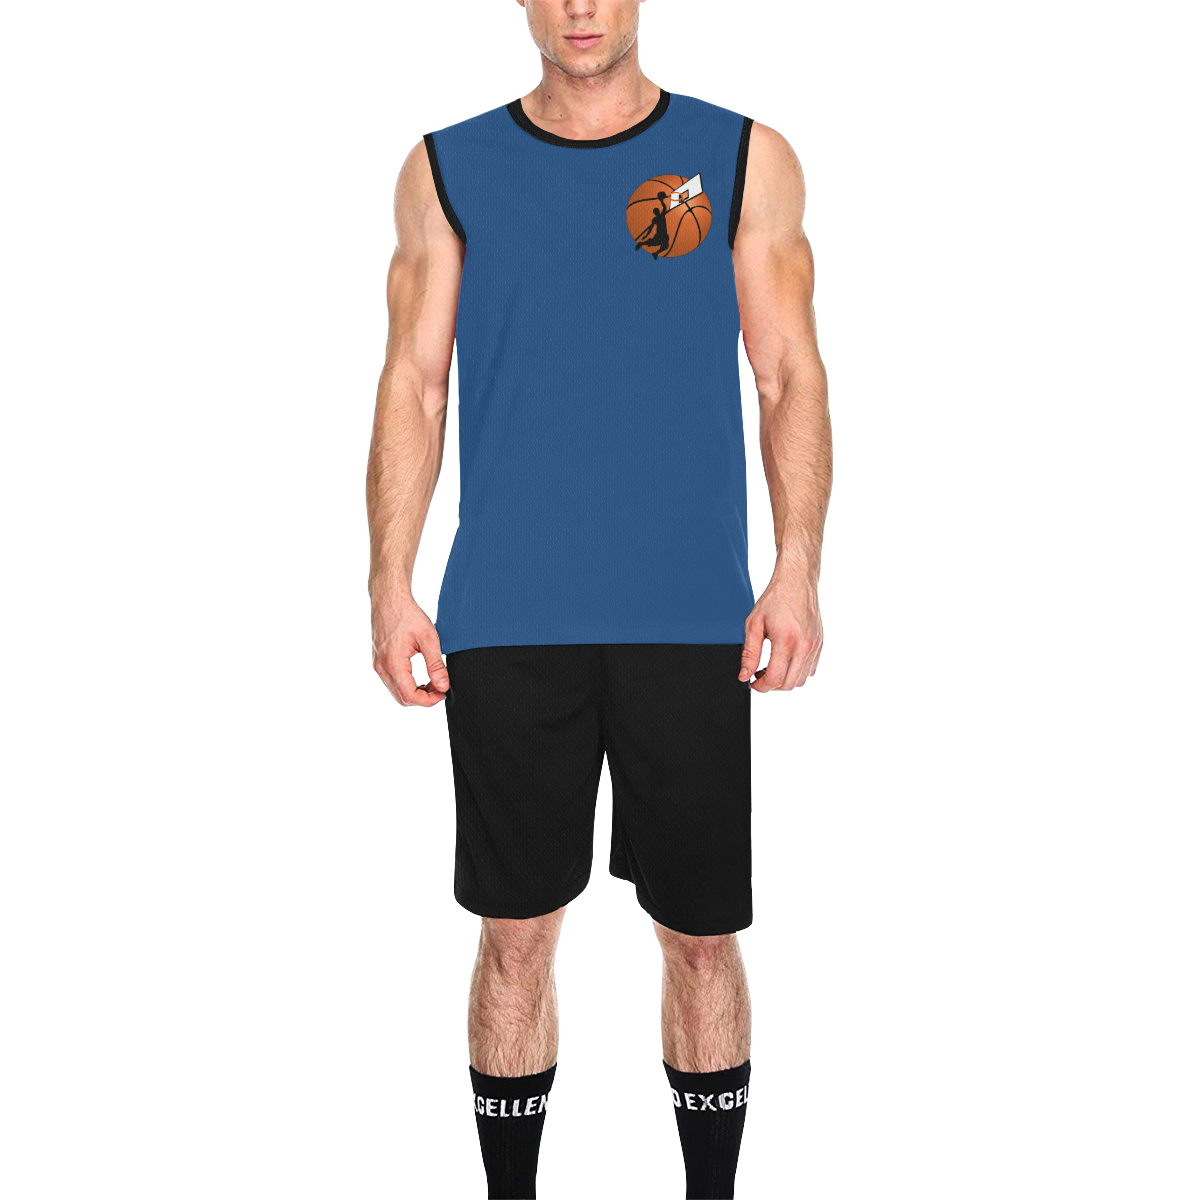 Slam Dunk Basketball Player Cerulean Blue and Black All Over Print Basketball Uniform